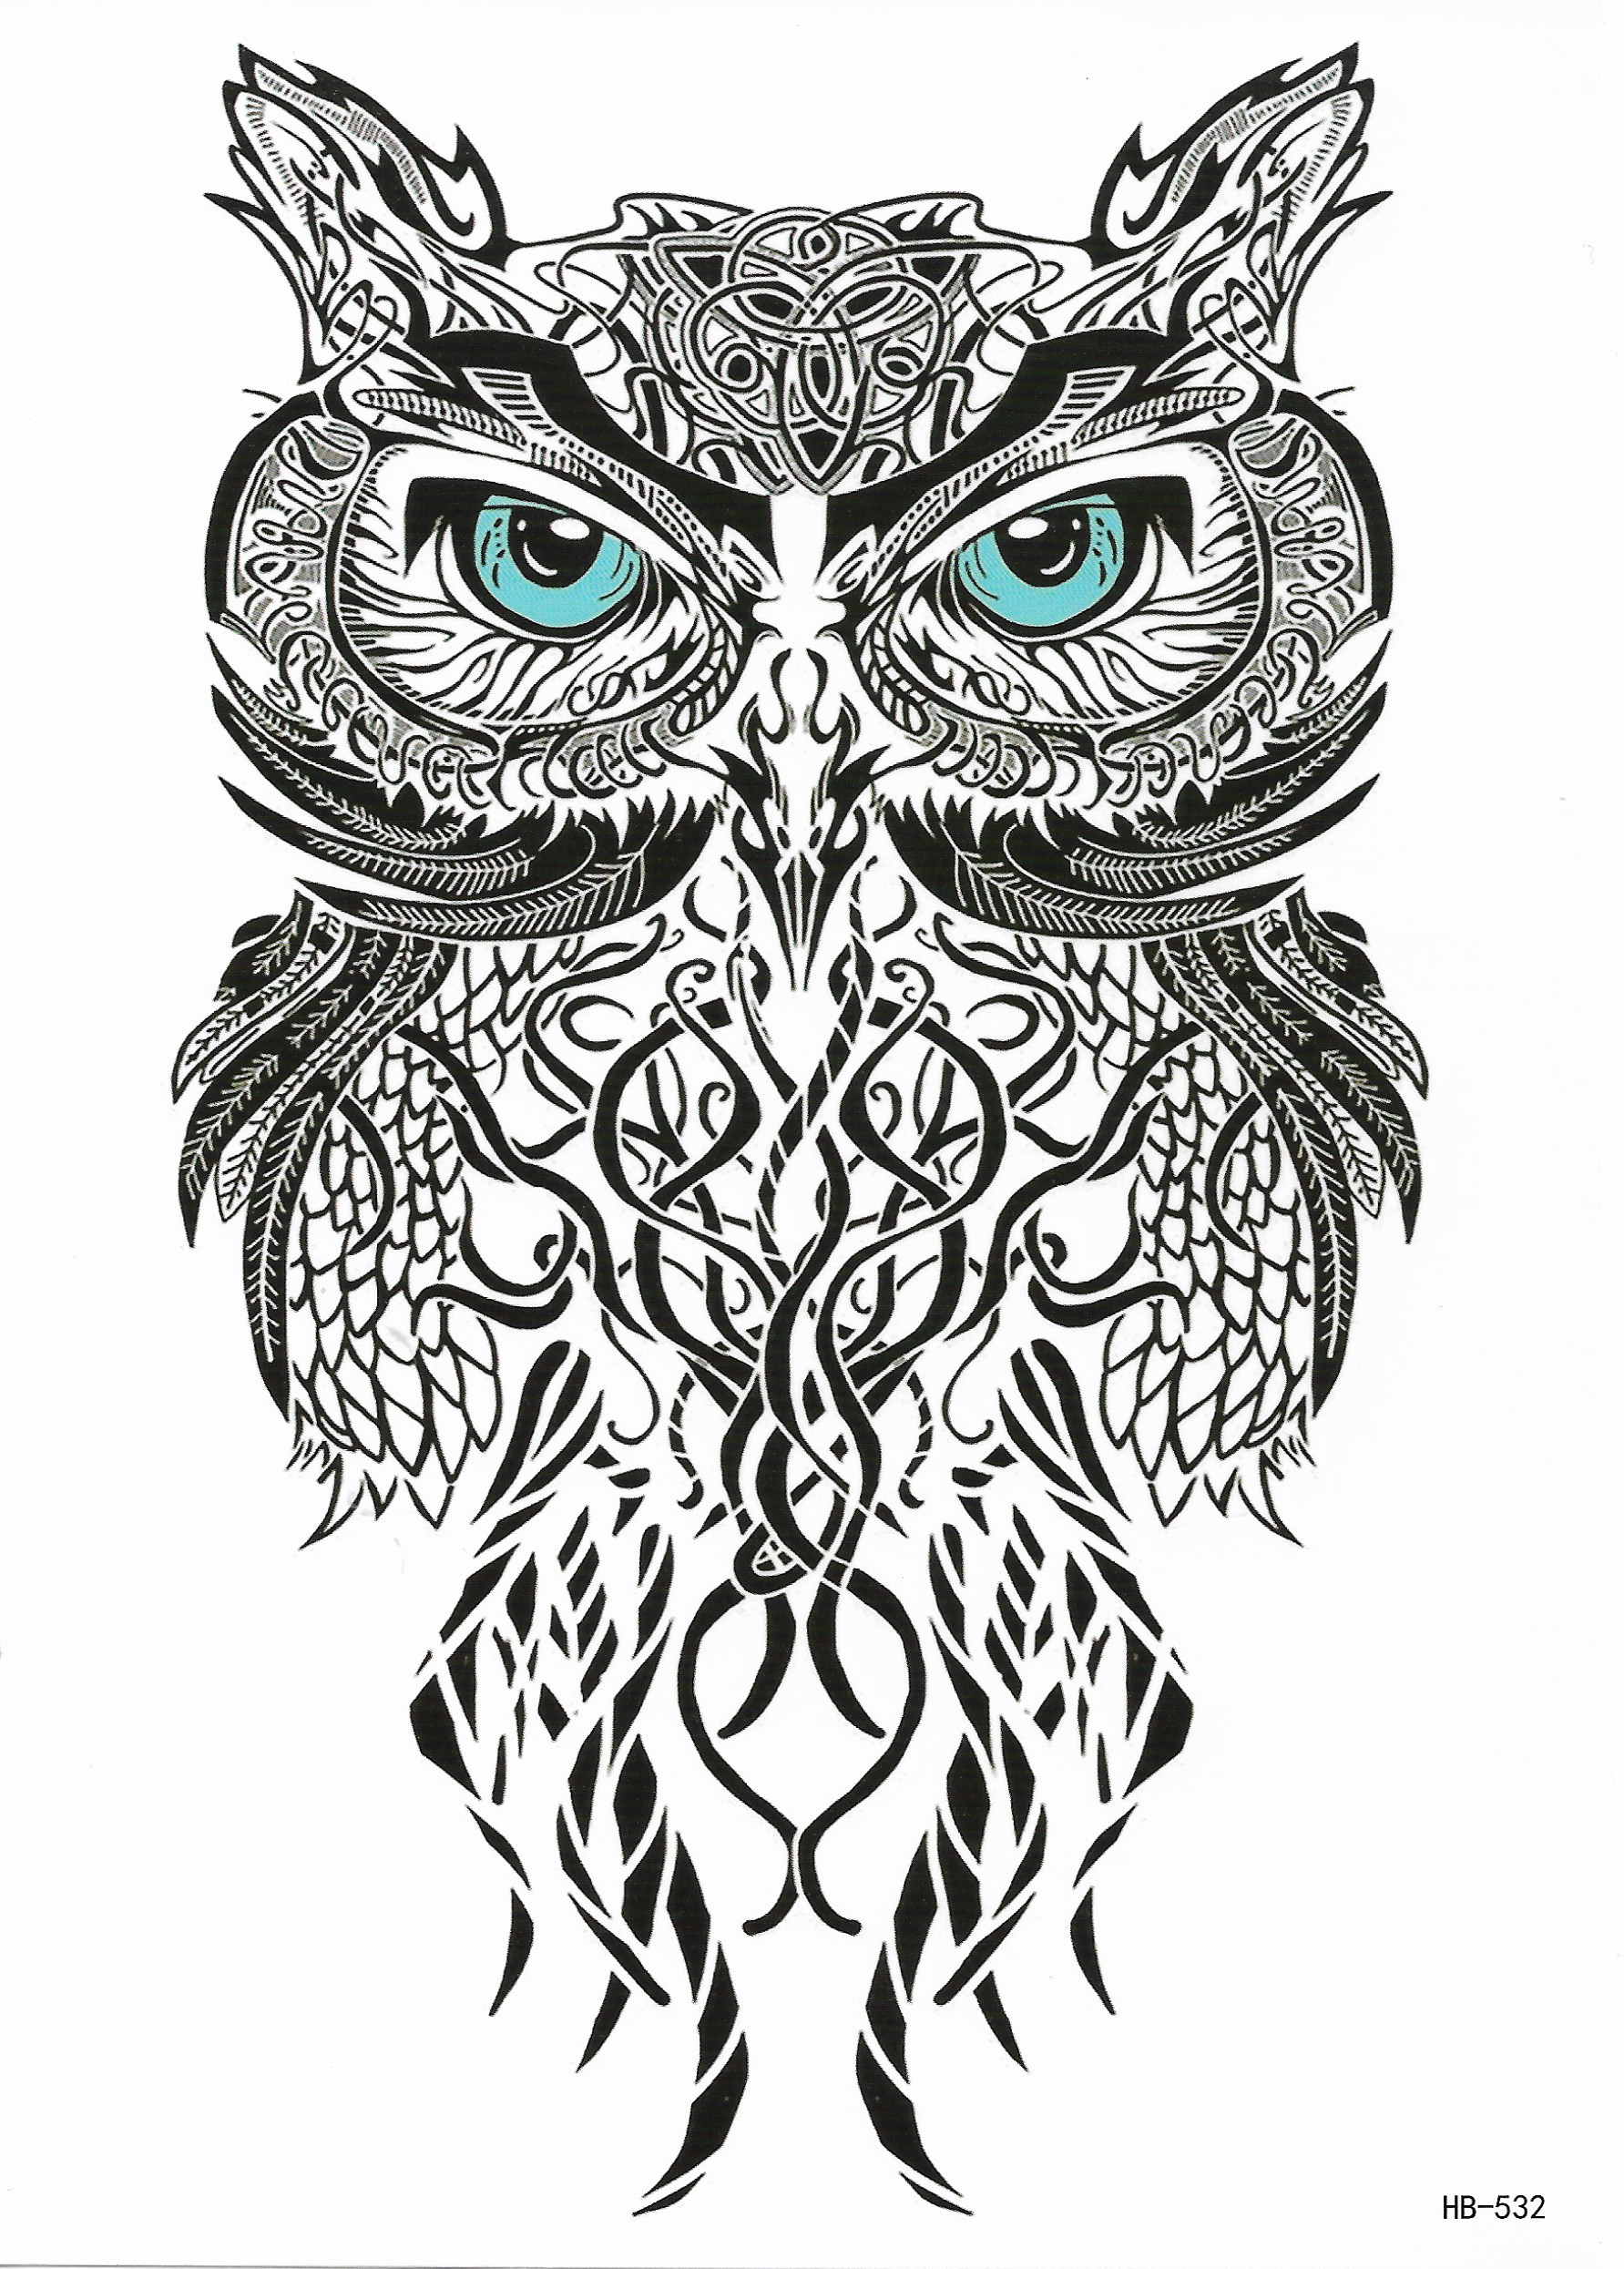 The Owl line art tattoo